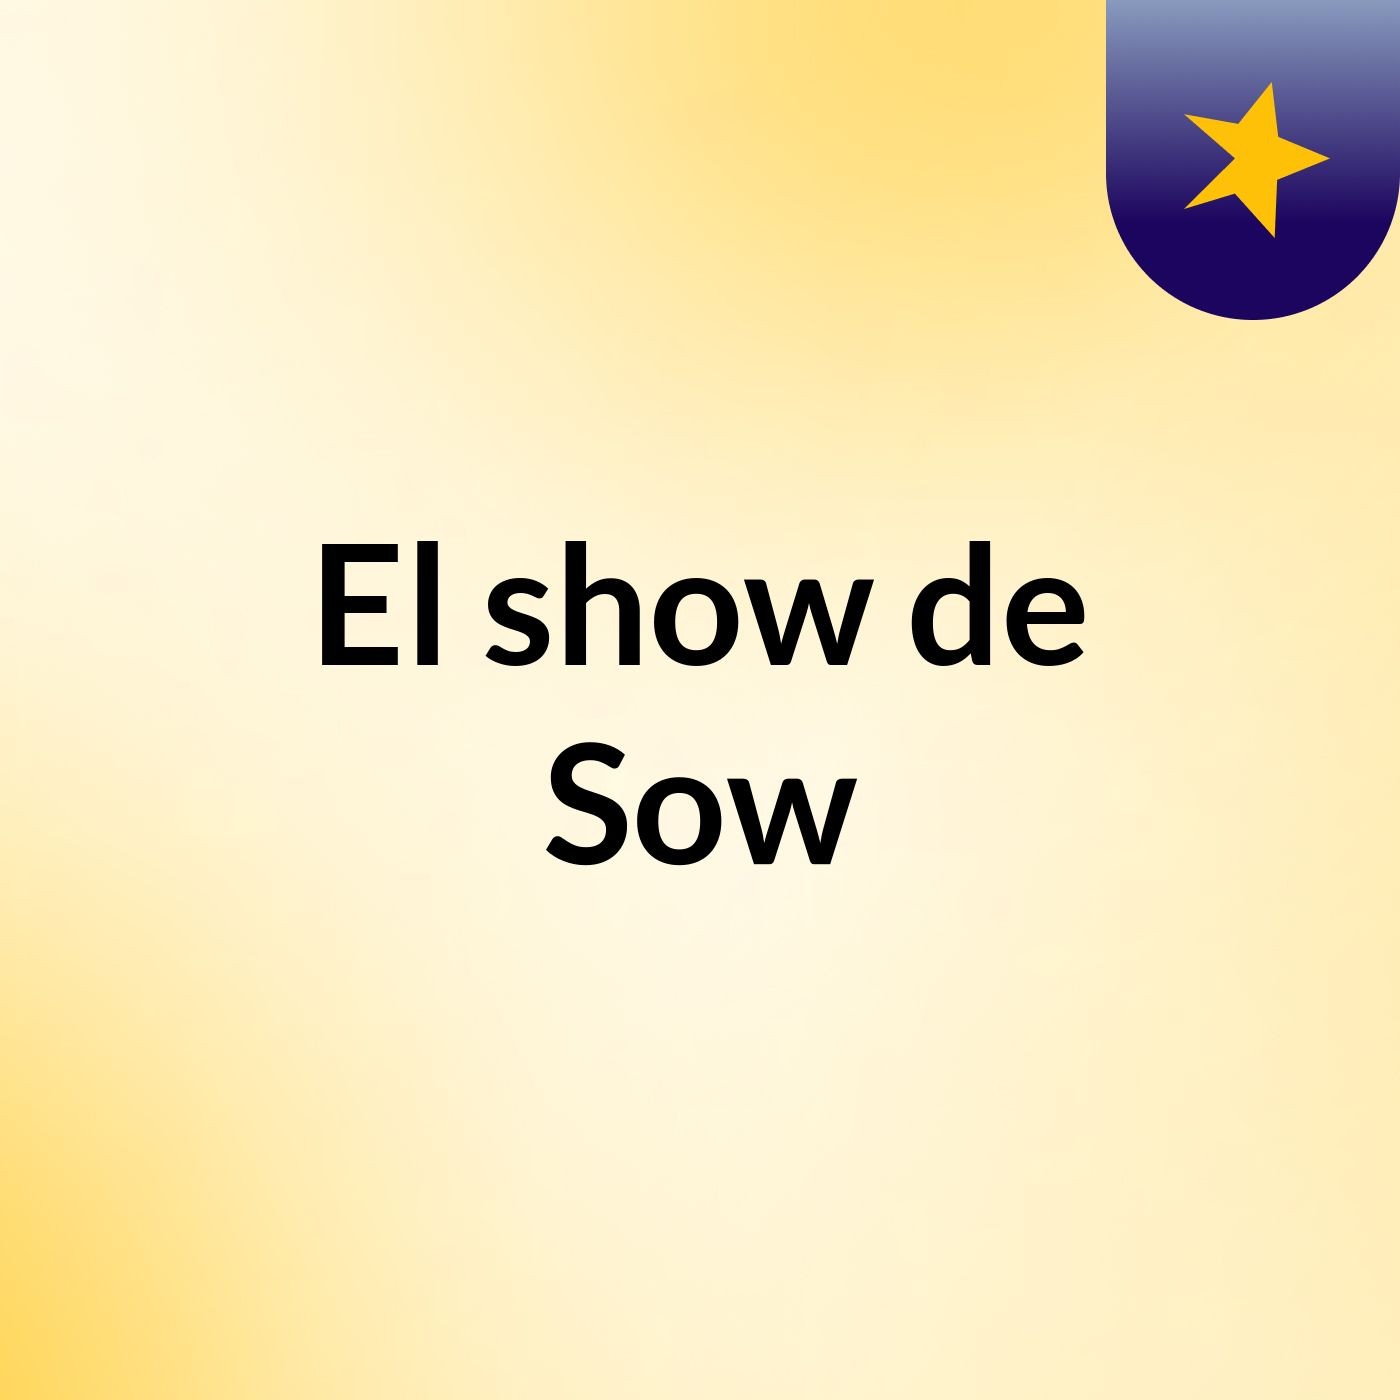 El show de Sow